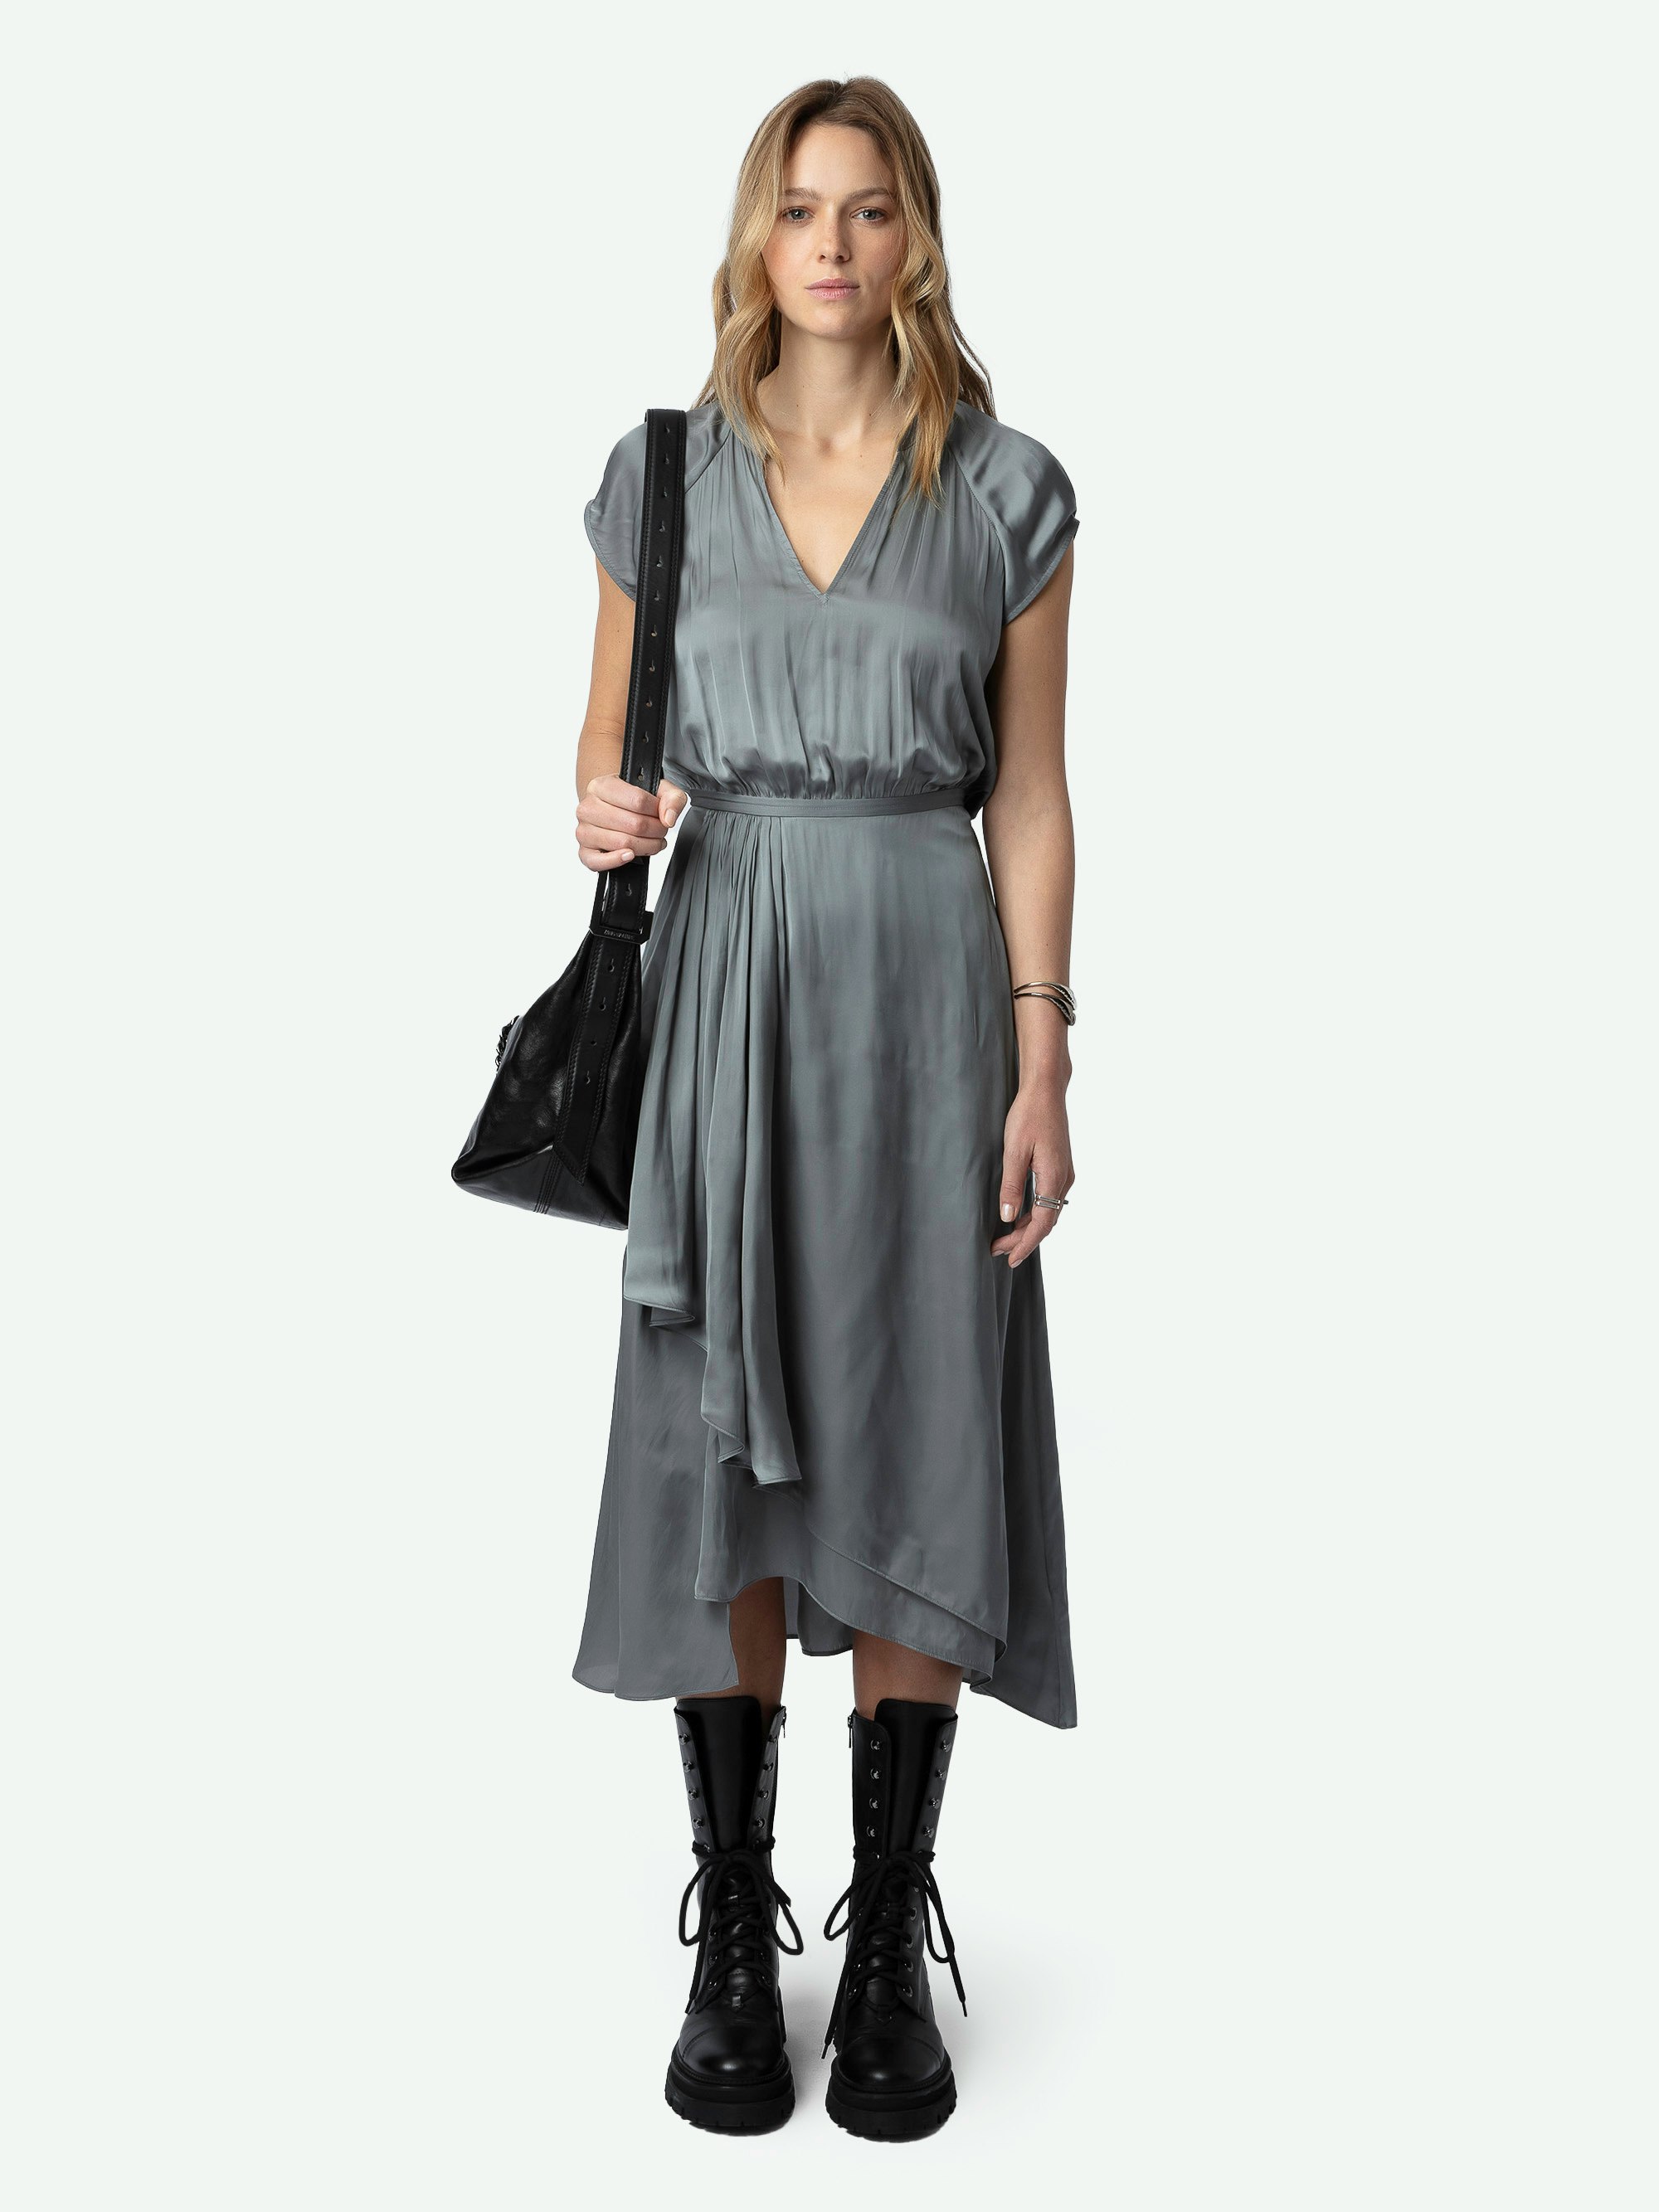 Randall Satin Dress - Grey satin midi dress with short raglan sleeves and skirt with ruffled asymmetrical panel.